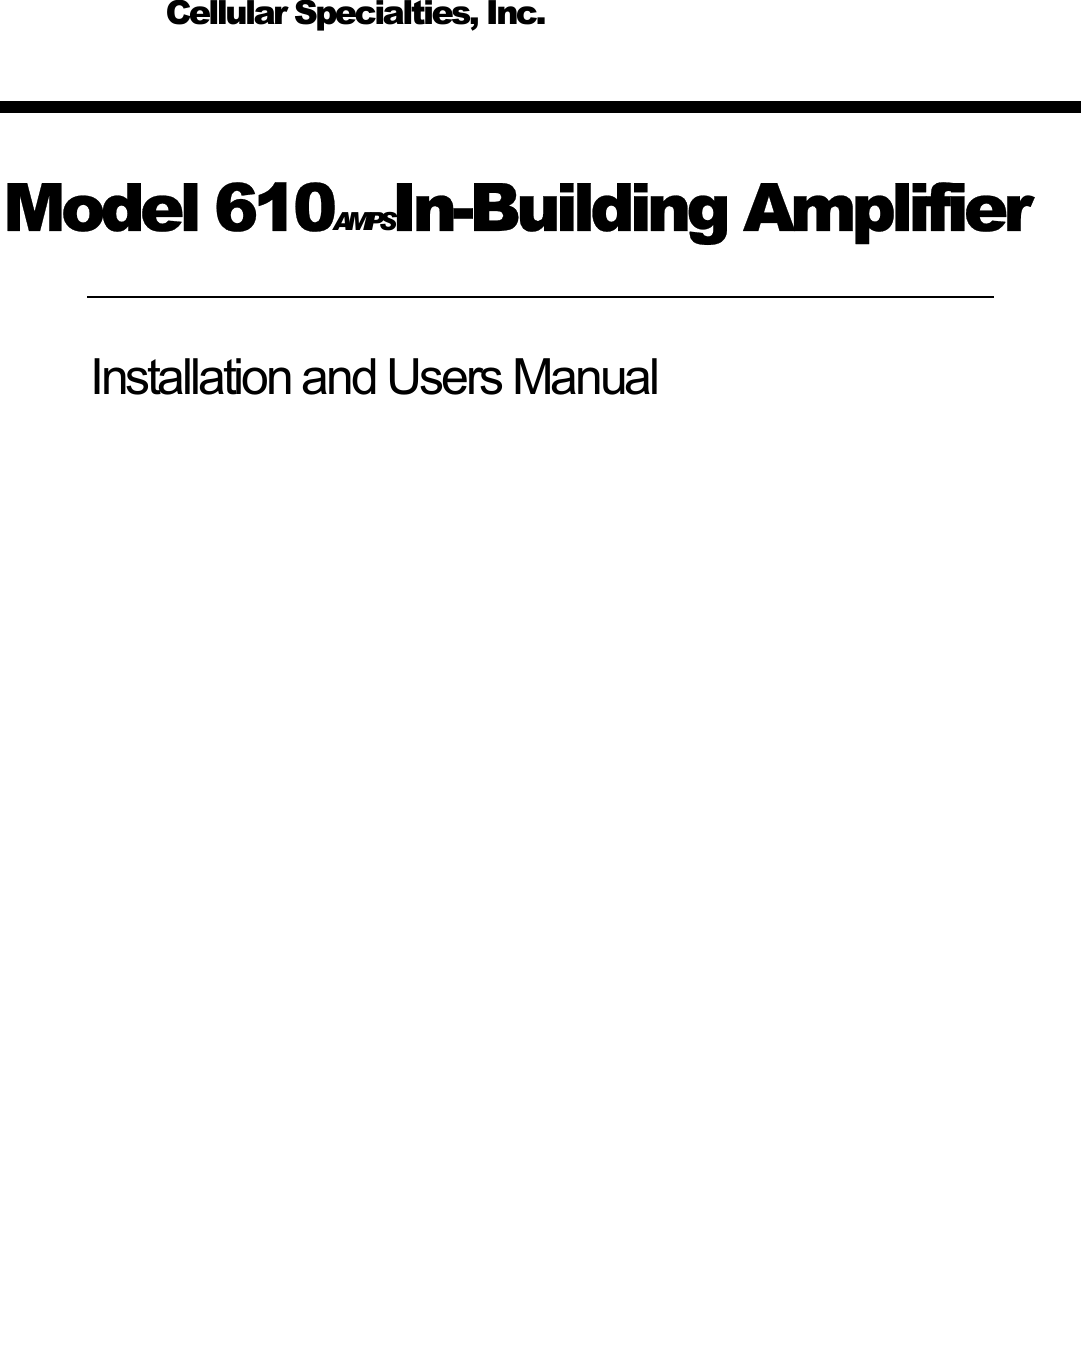     Model 610AMPSIn-Building Amplifier Installation and Users Manual       Cellular Specialties, Inc. 